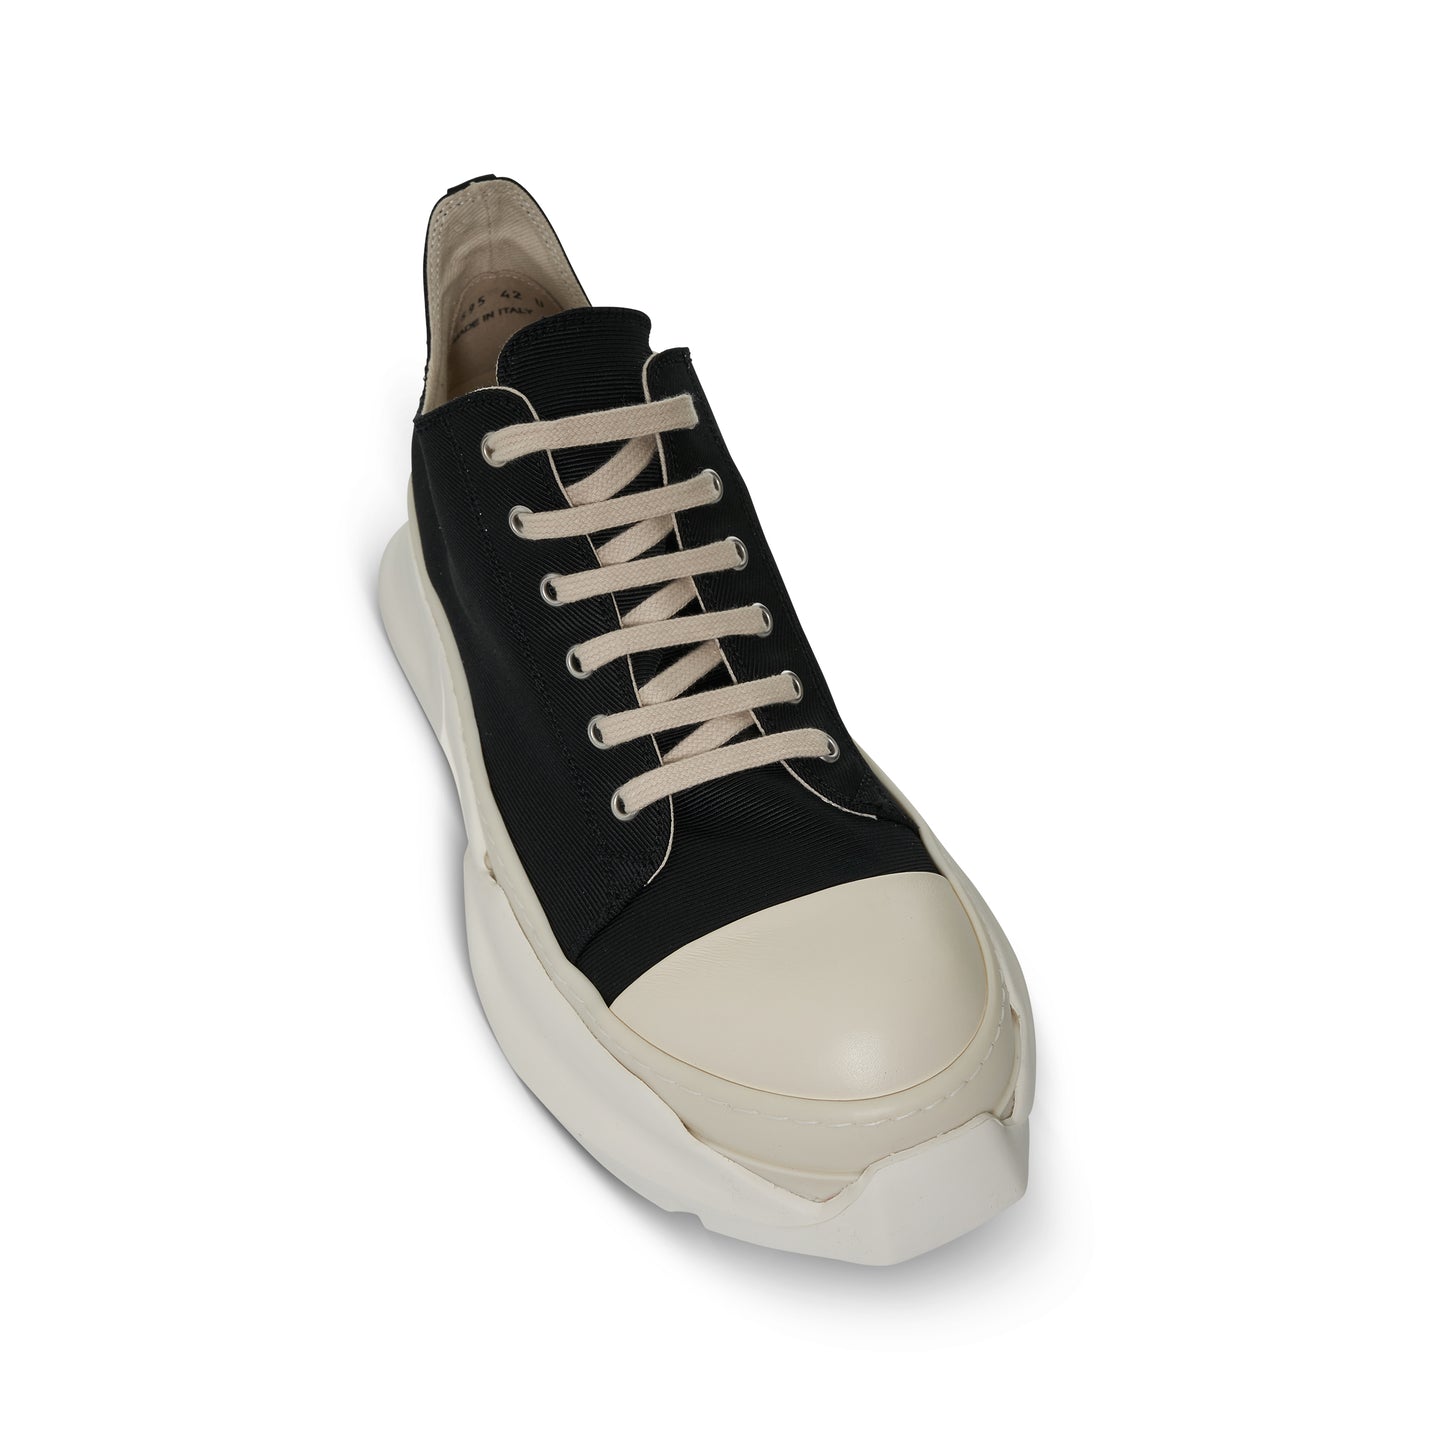 DRKSHDW Abstract Low Sneaker in Black/Milk FC